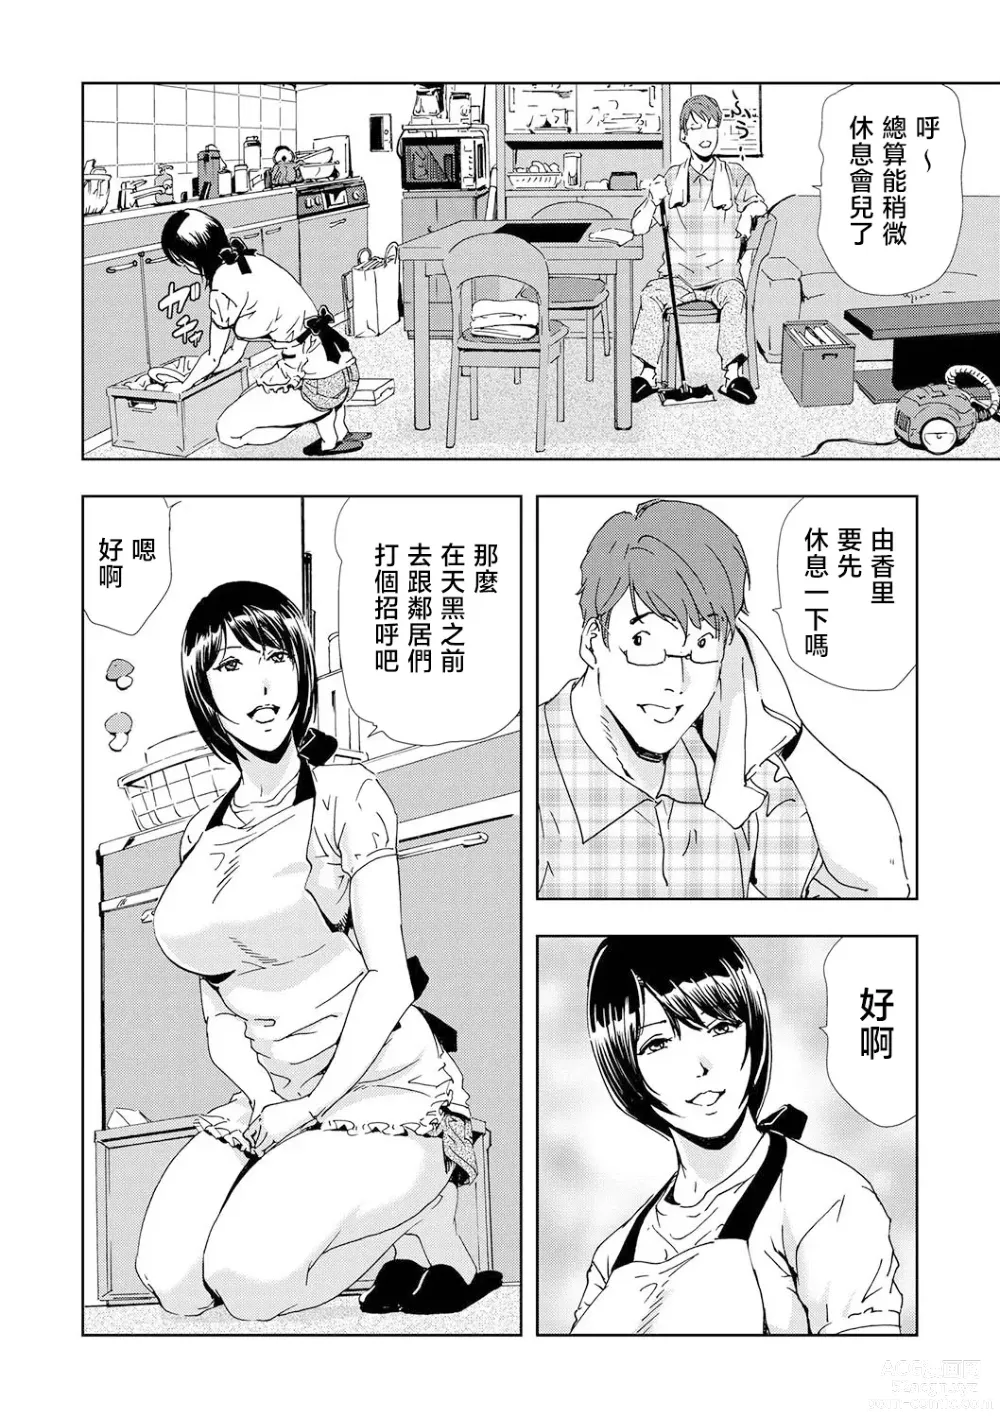 Page 3 of manga Netorare Vol.04